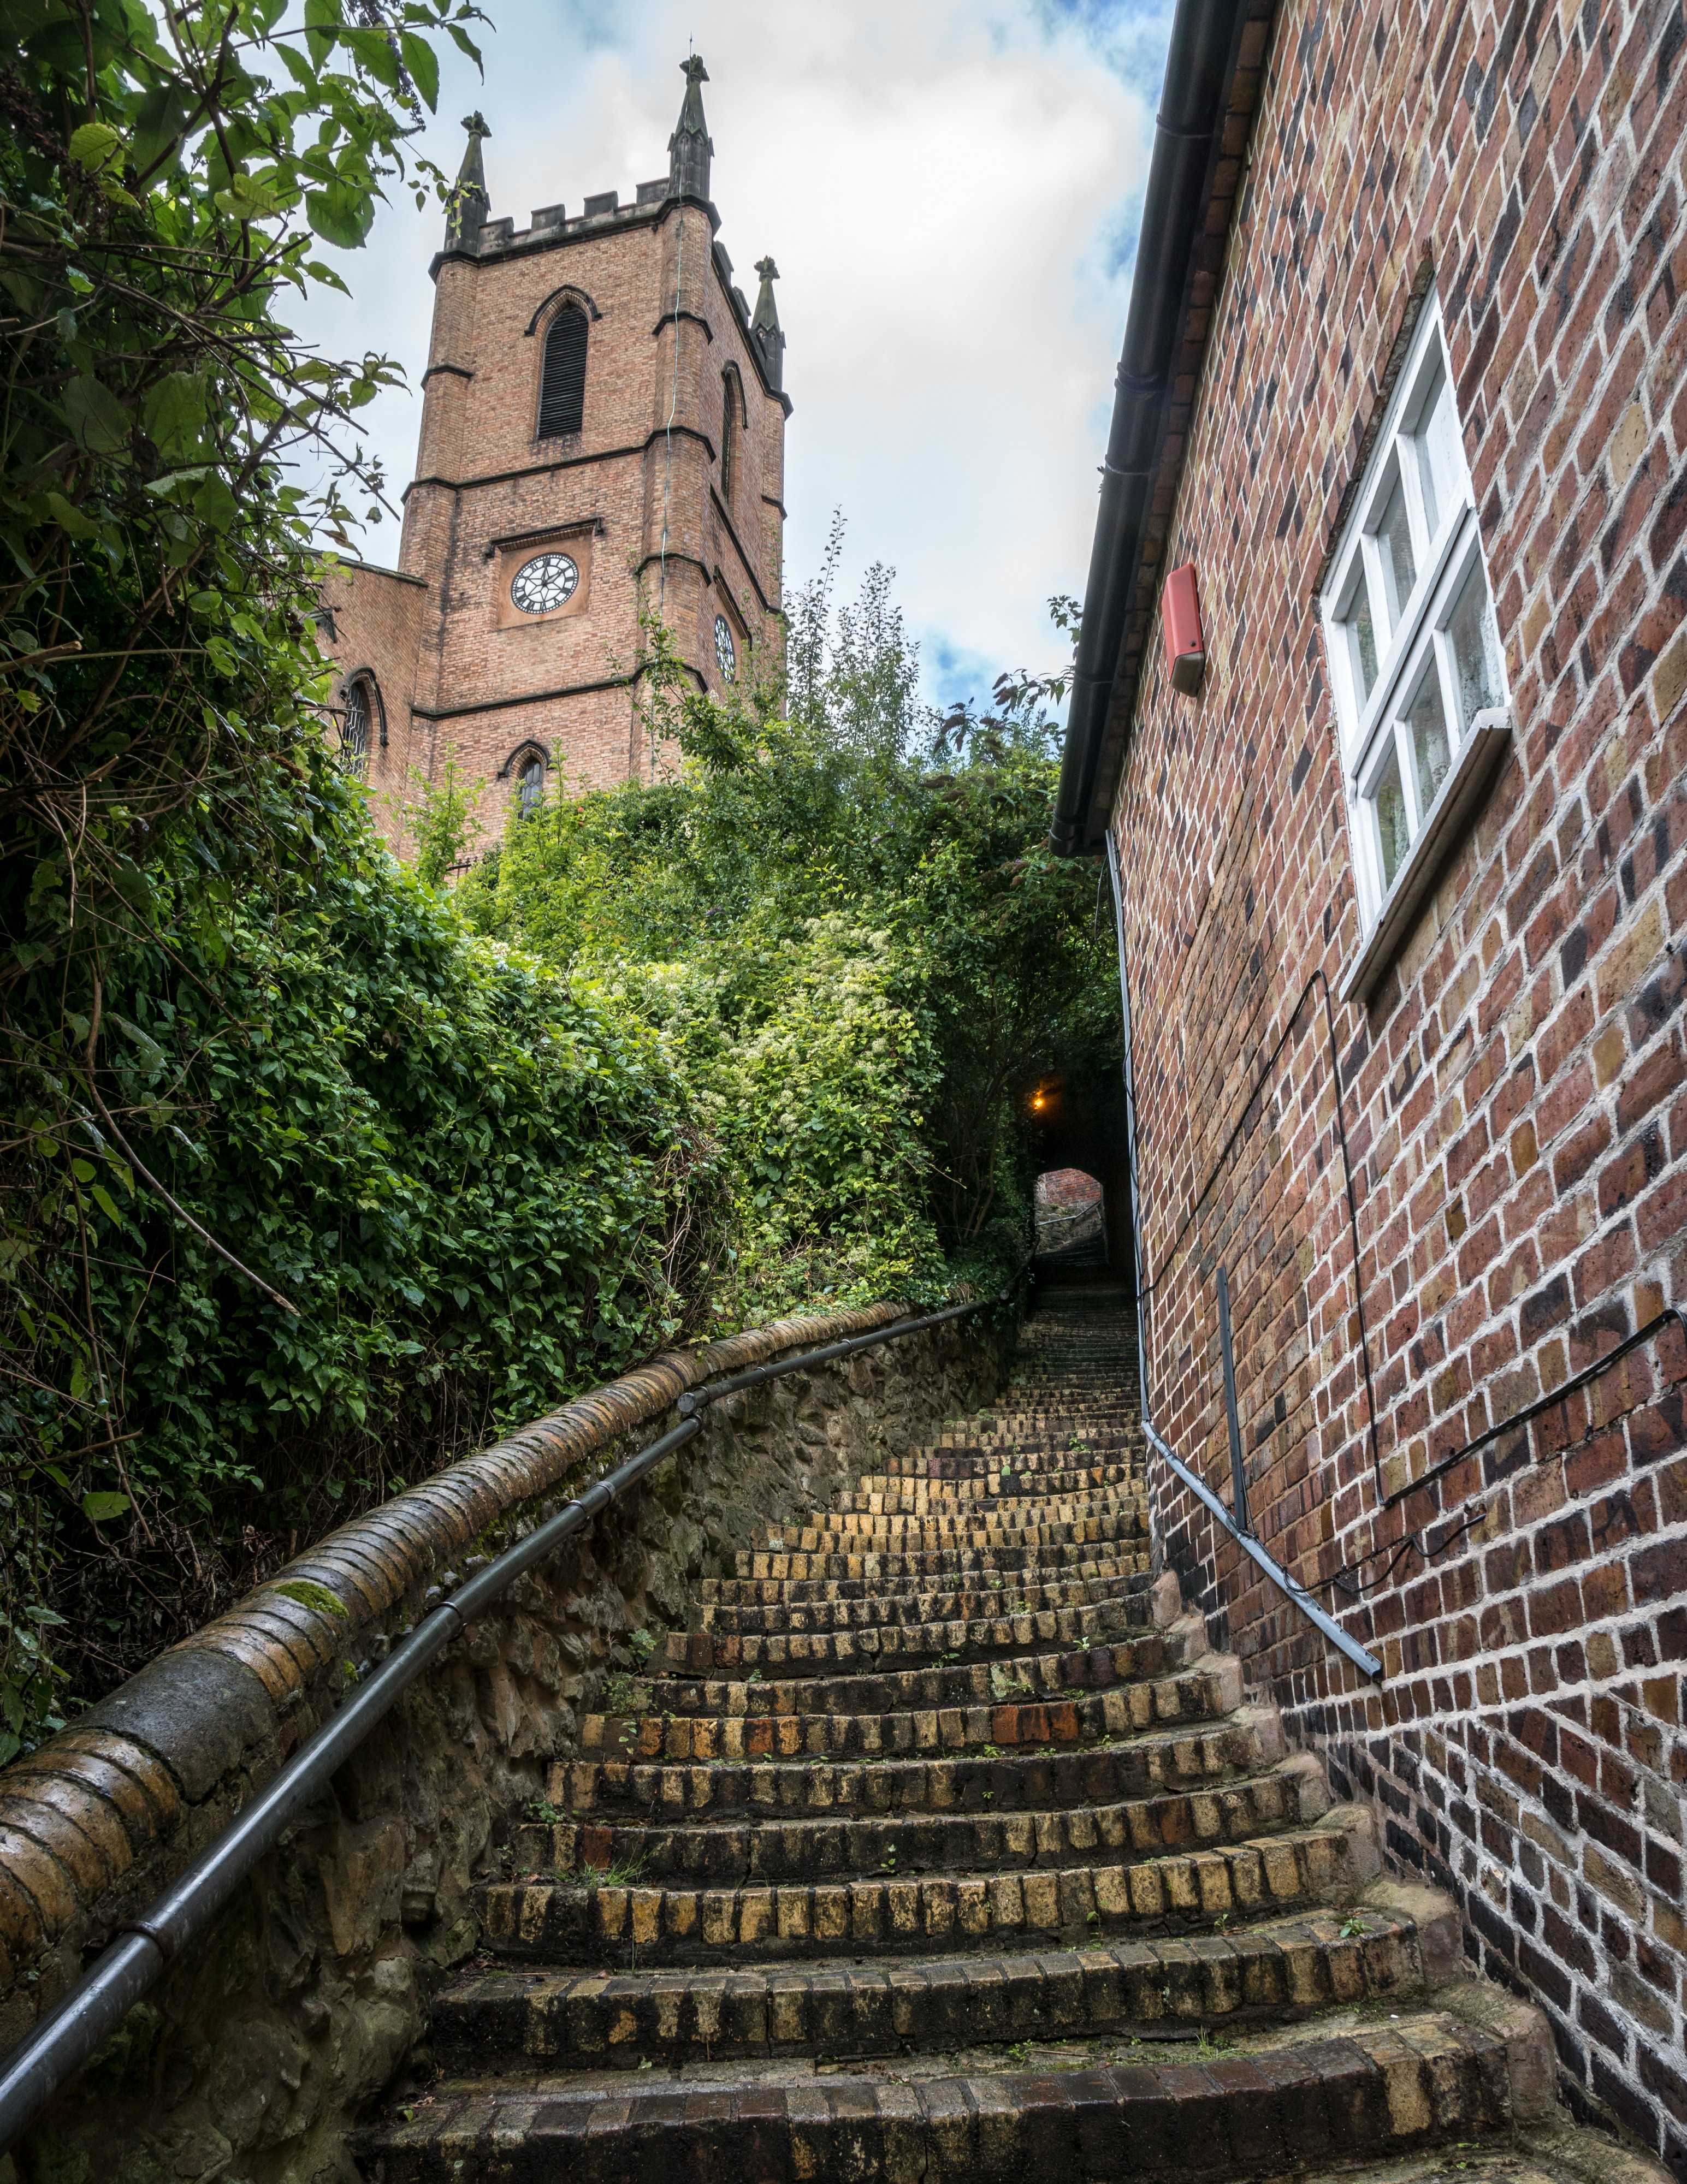 Stairs leading up to the Church of St Luke, Ironbridge